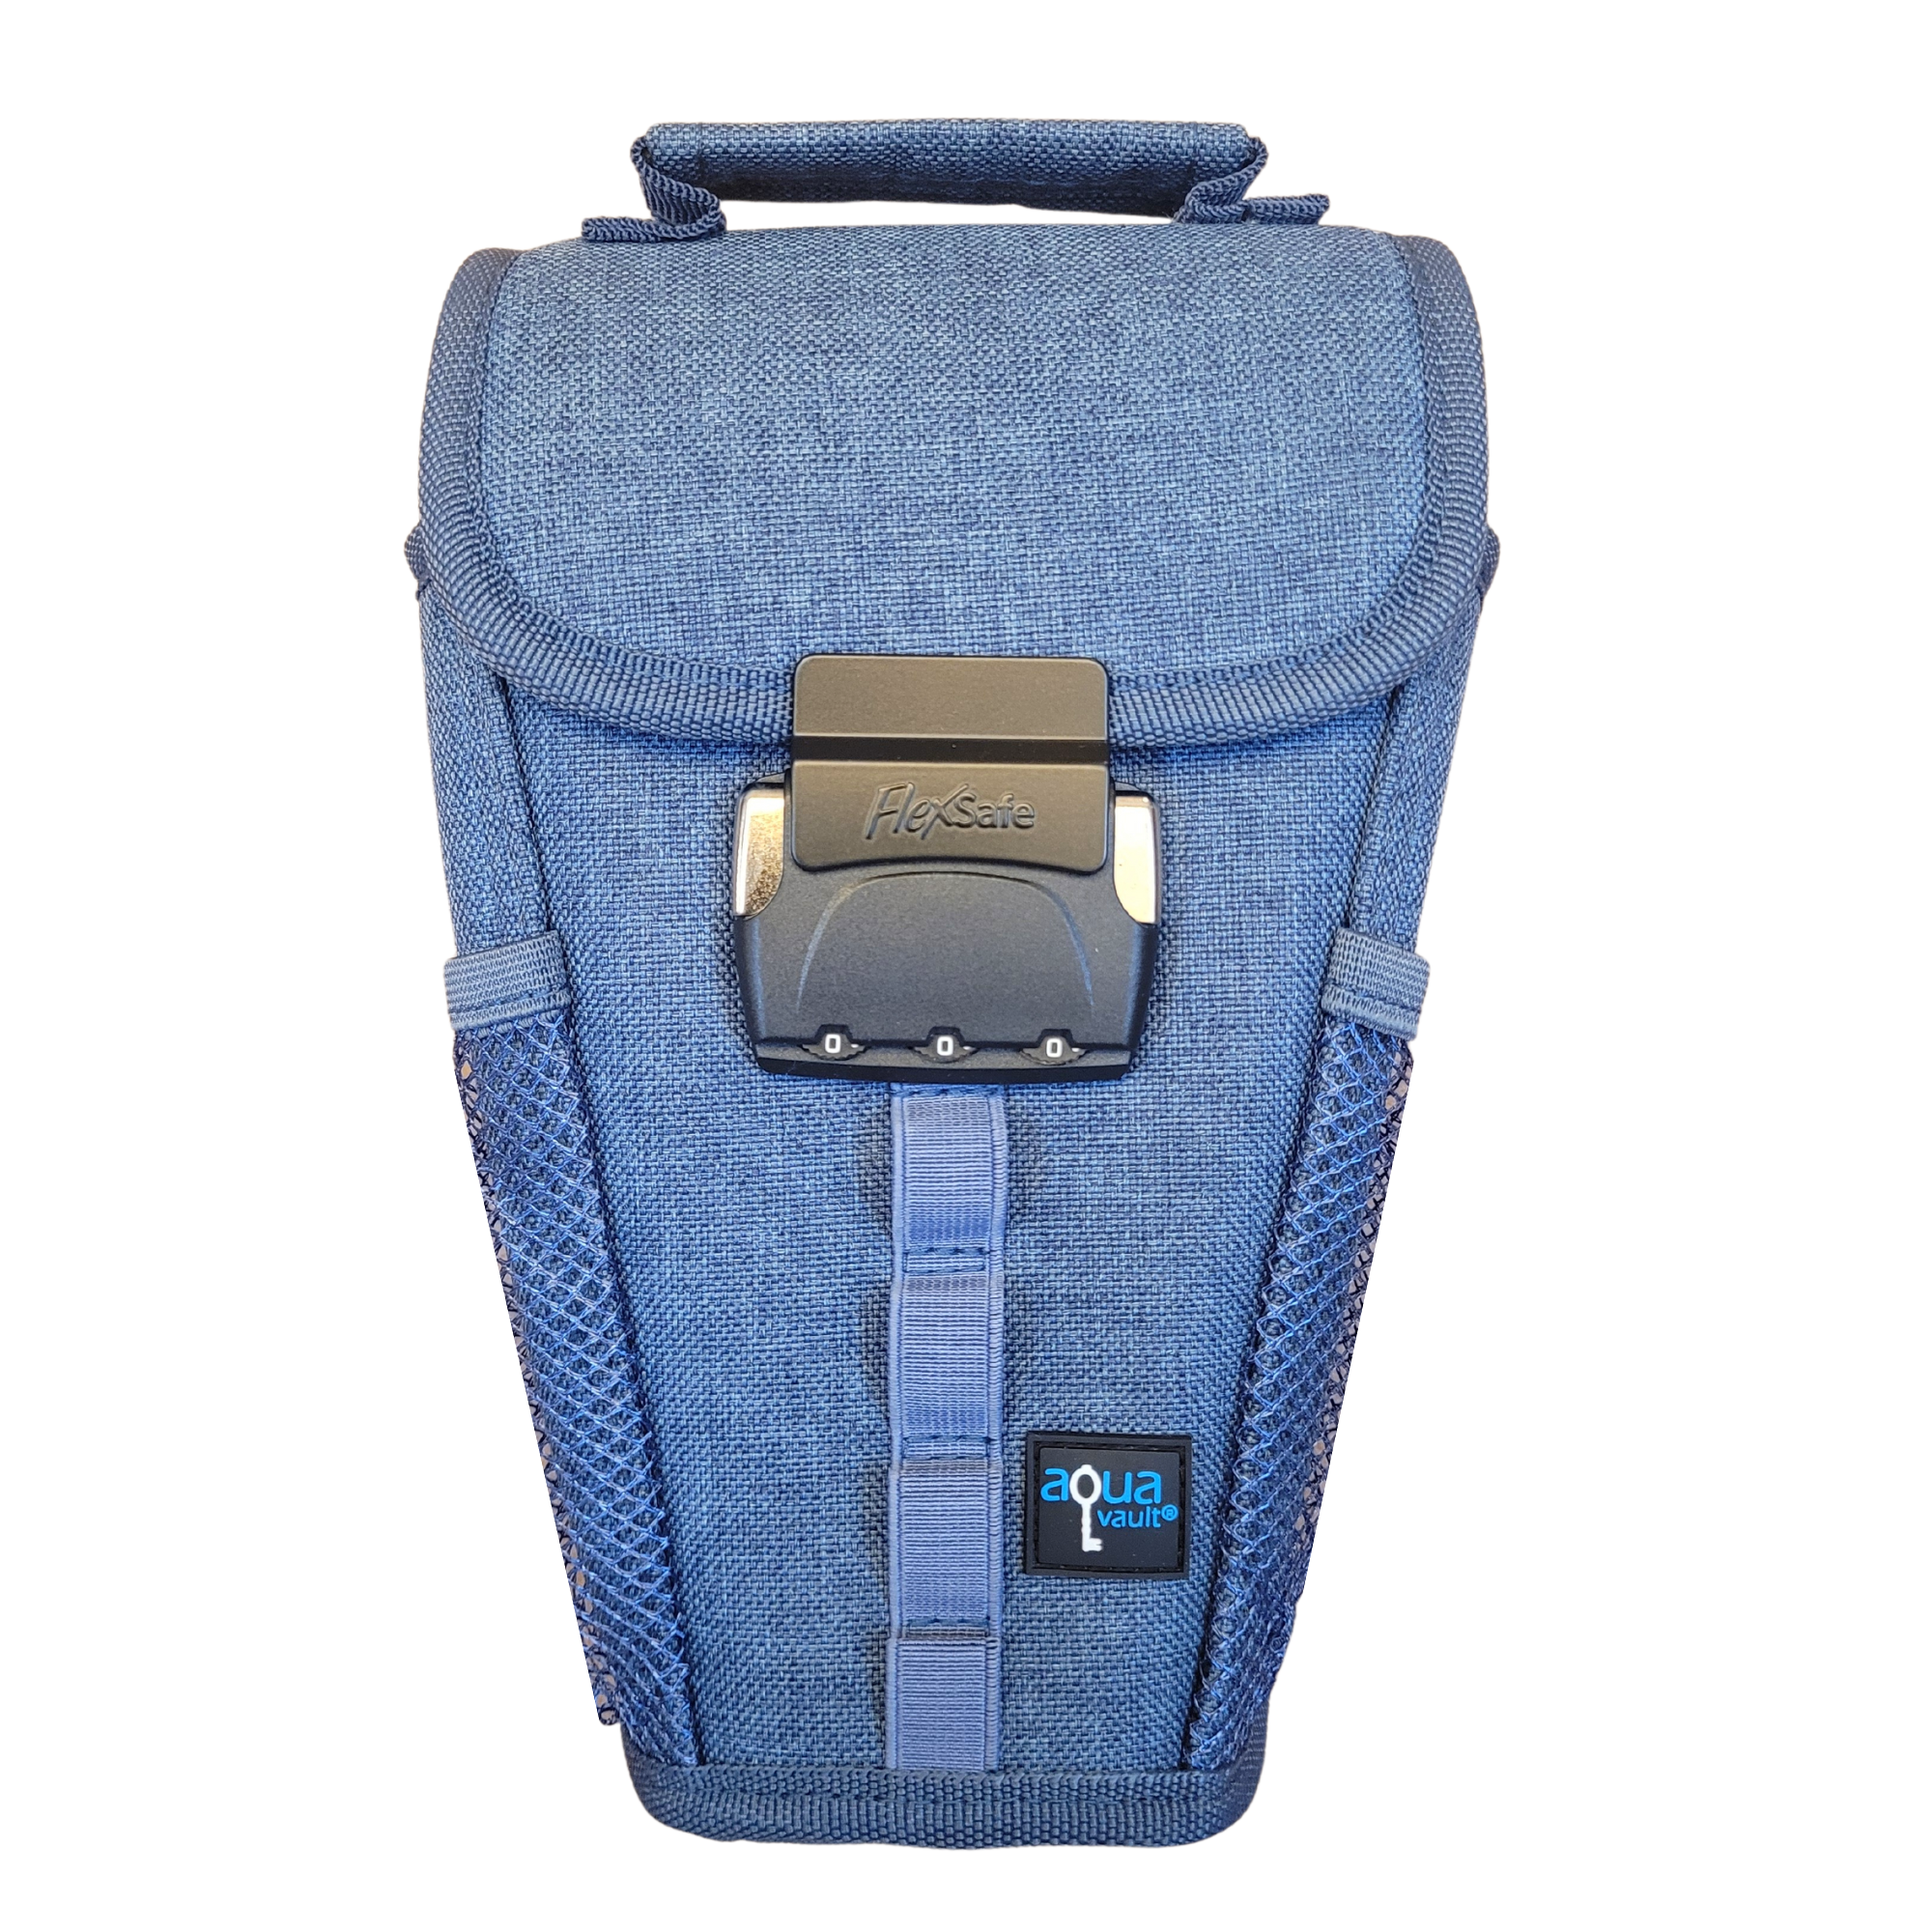 Handbag Purse Organizer Insert  Patented, Sturdy and Flexible